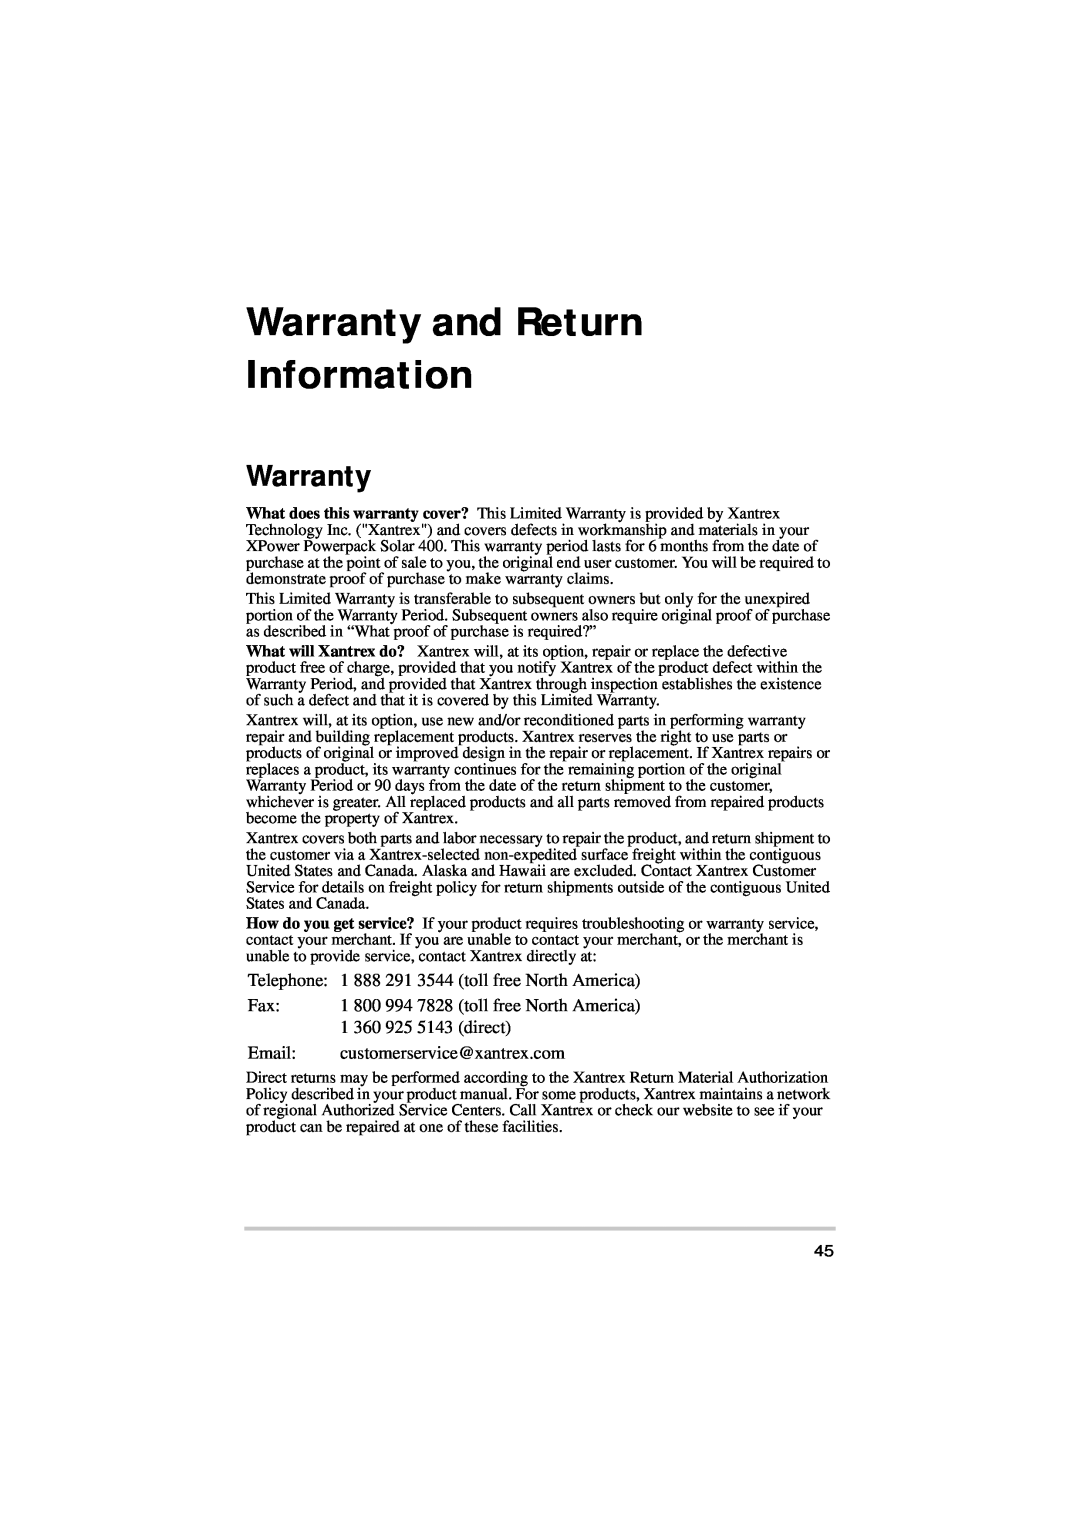 Xantrex Technology Solar 400 manual Warranty and Return Information 